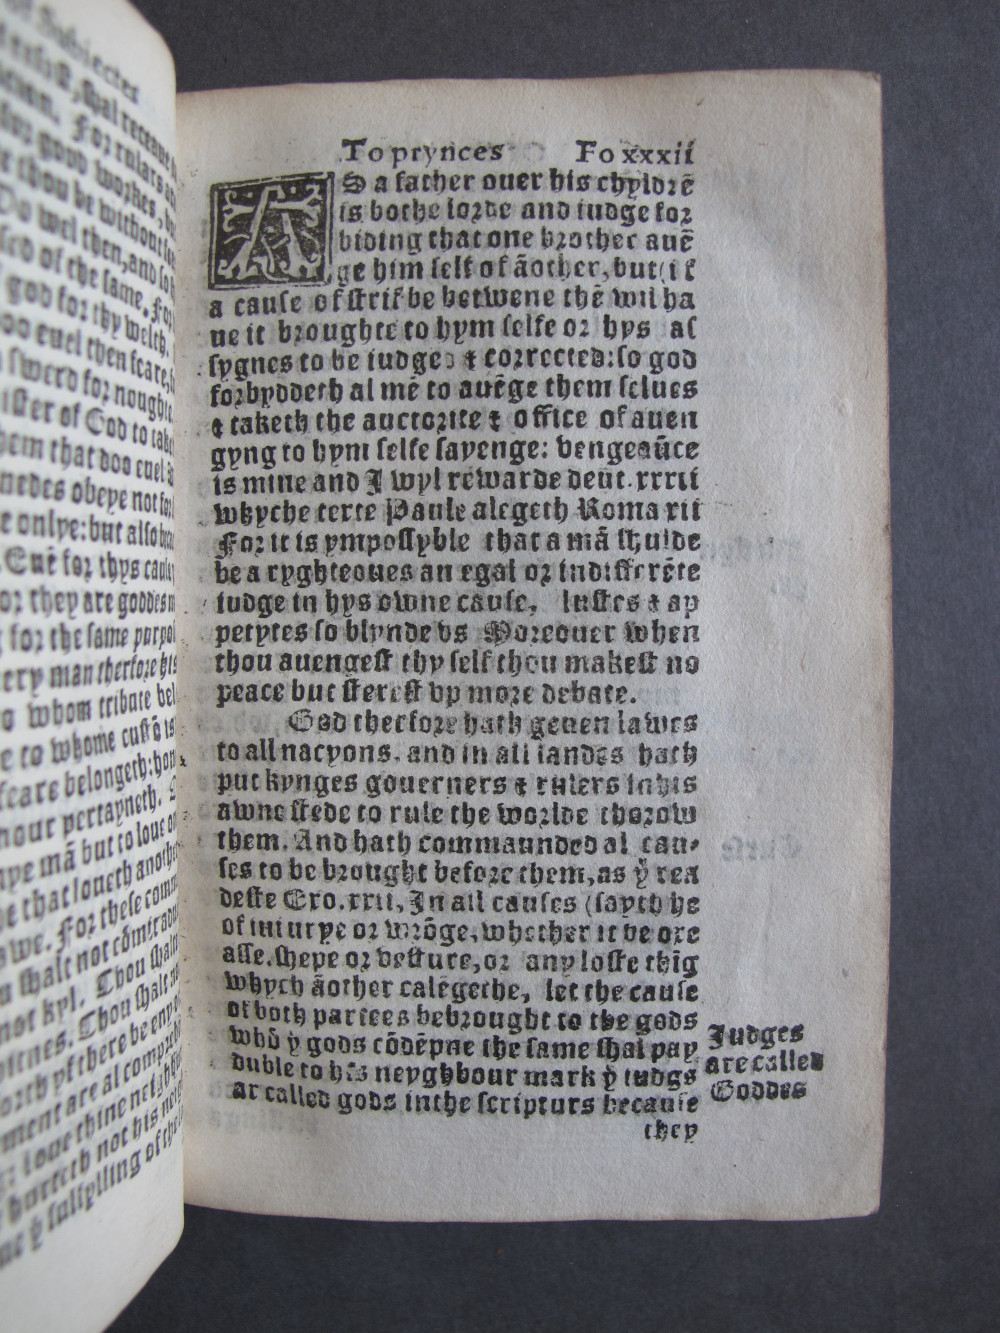 1 Folio D8 recto